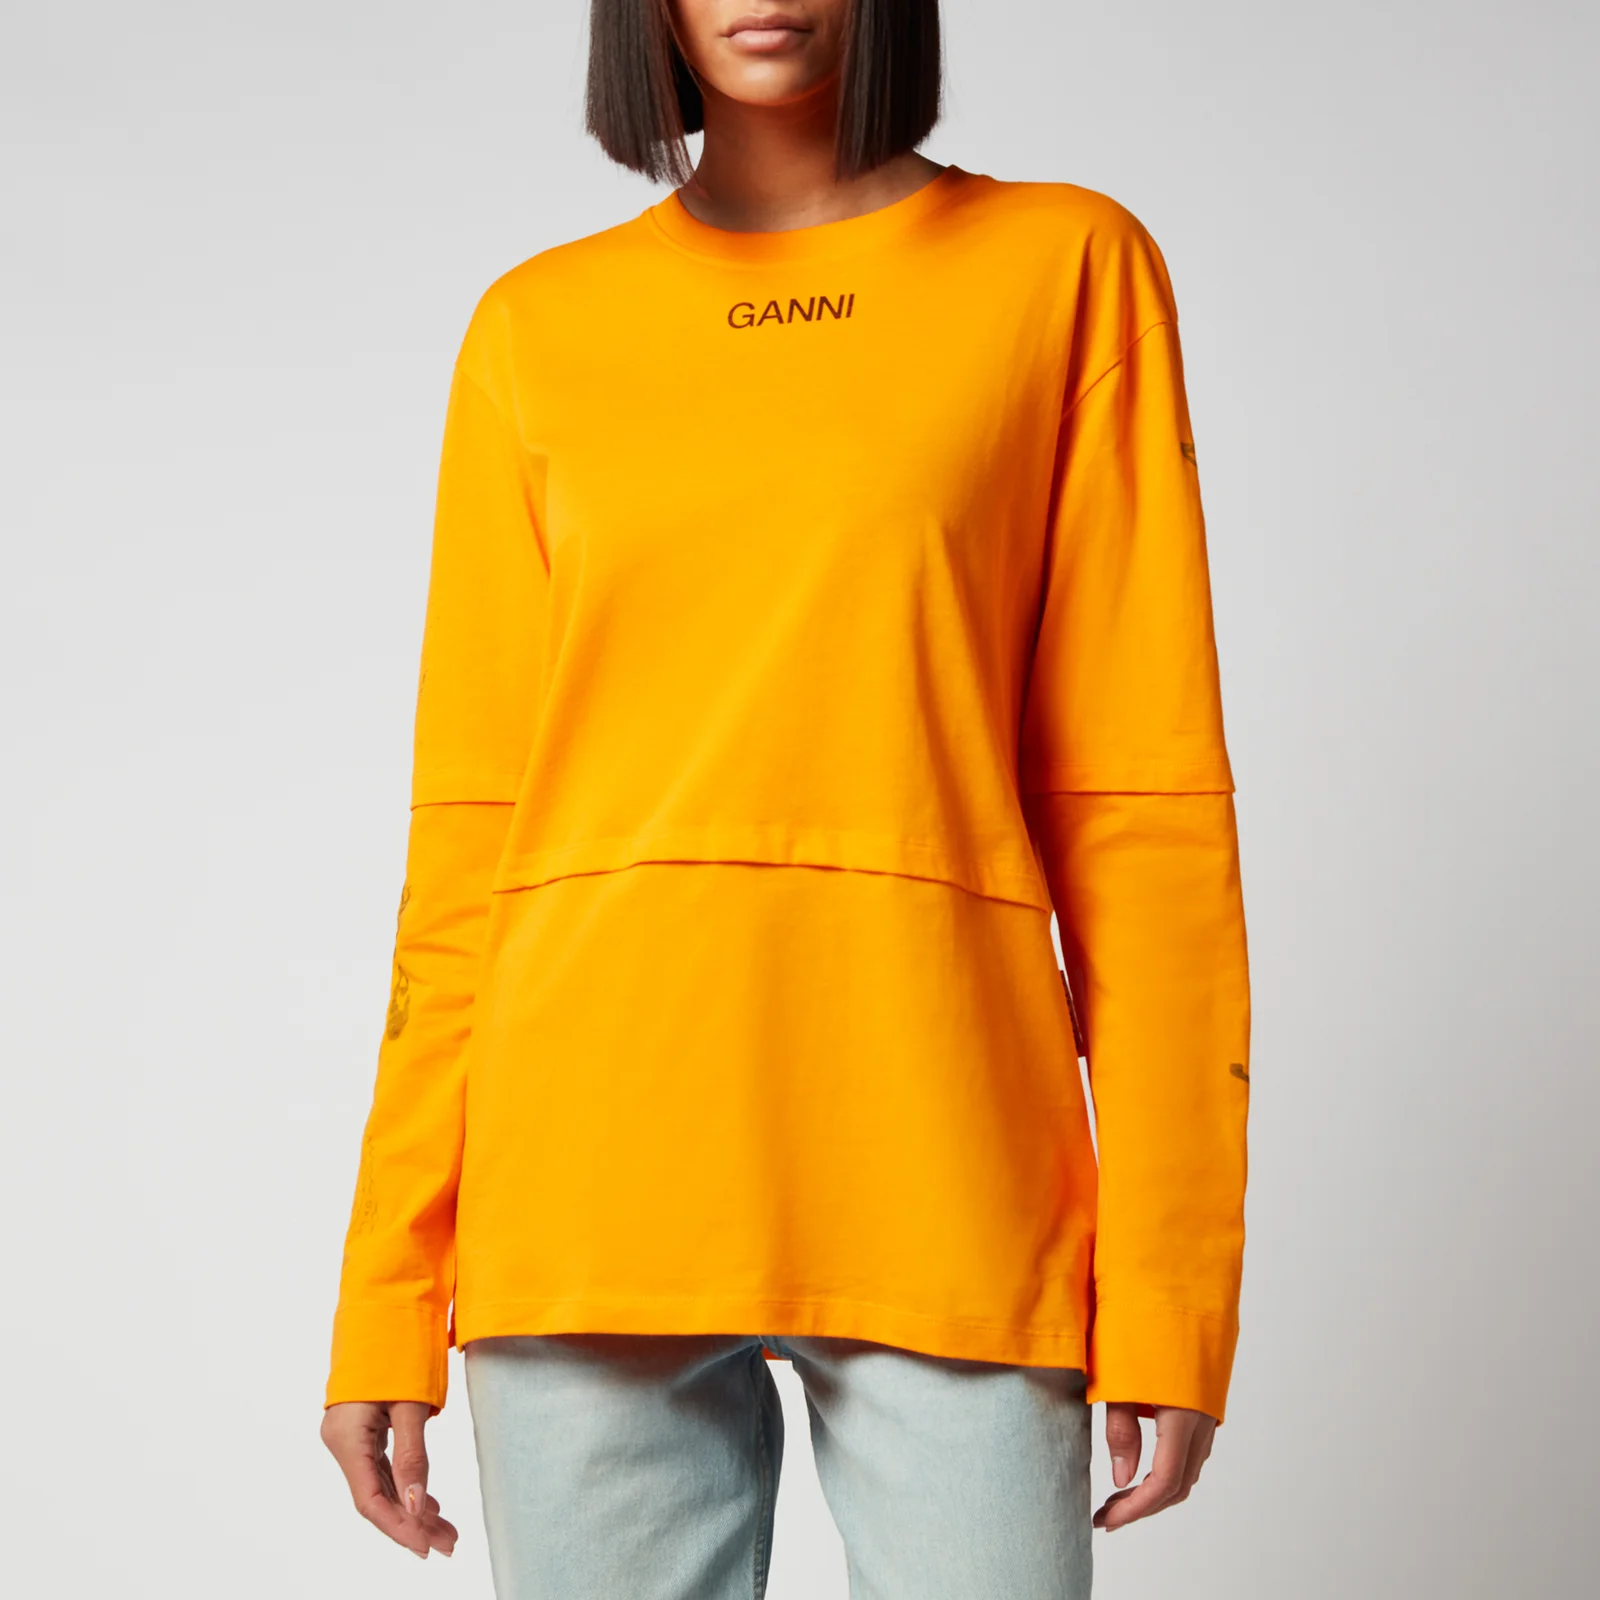 Ganni Women's Light Cotton Jersey Long Sleeved Top - Bright Marigold Image 1